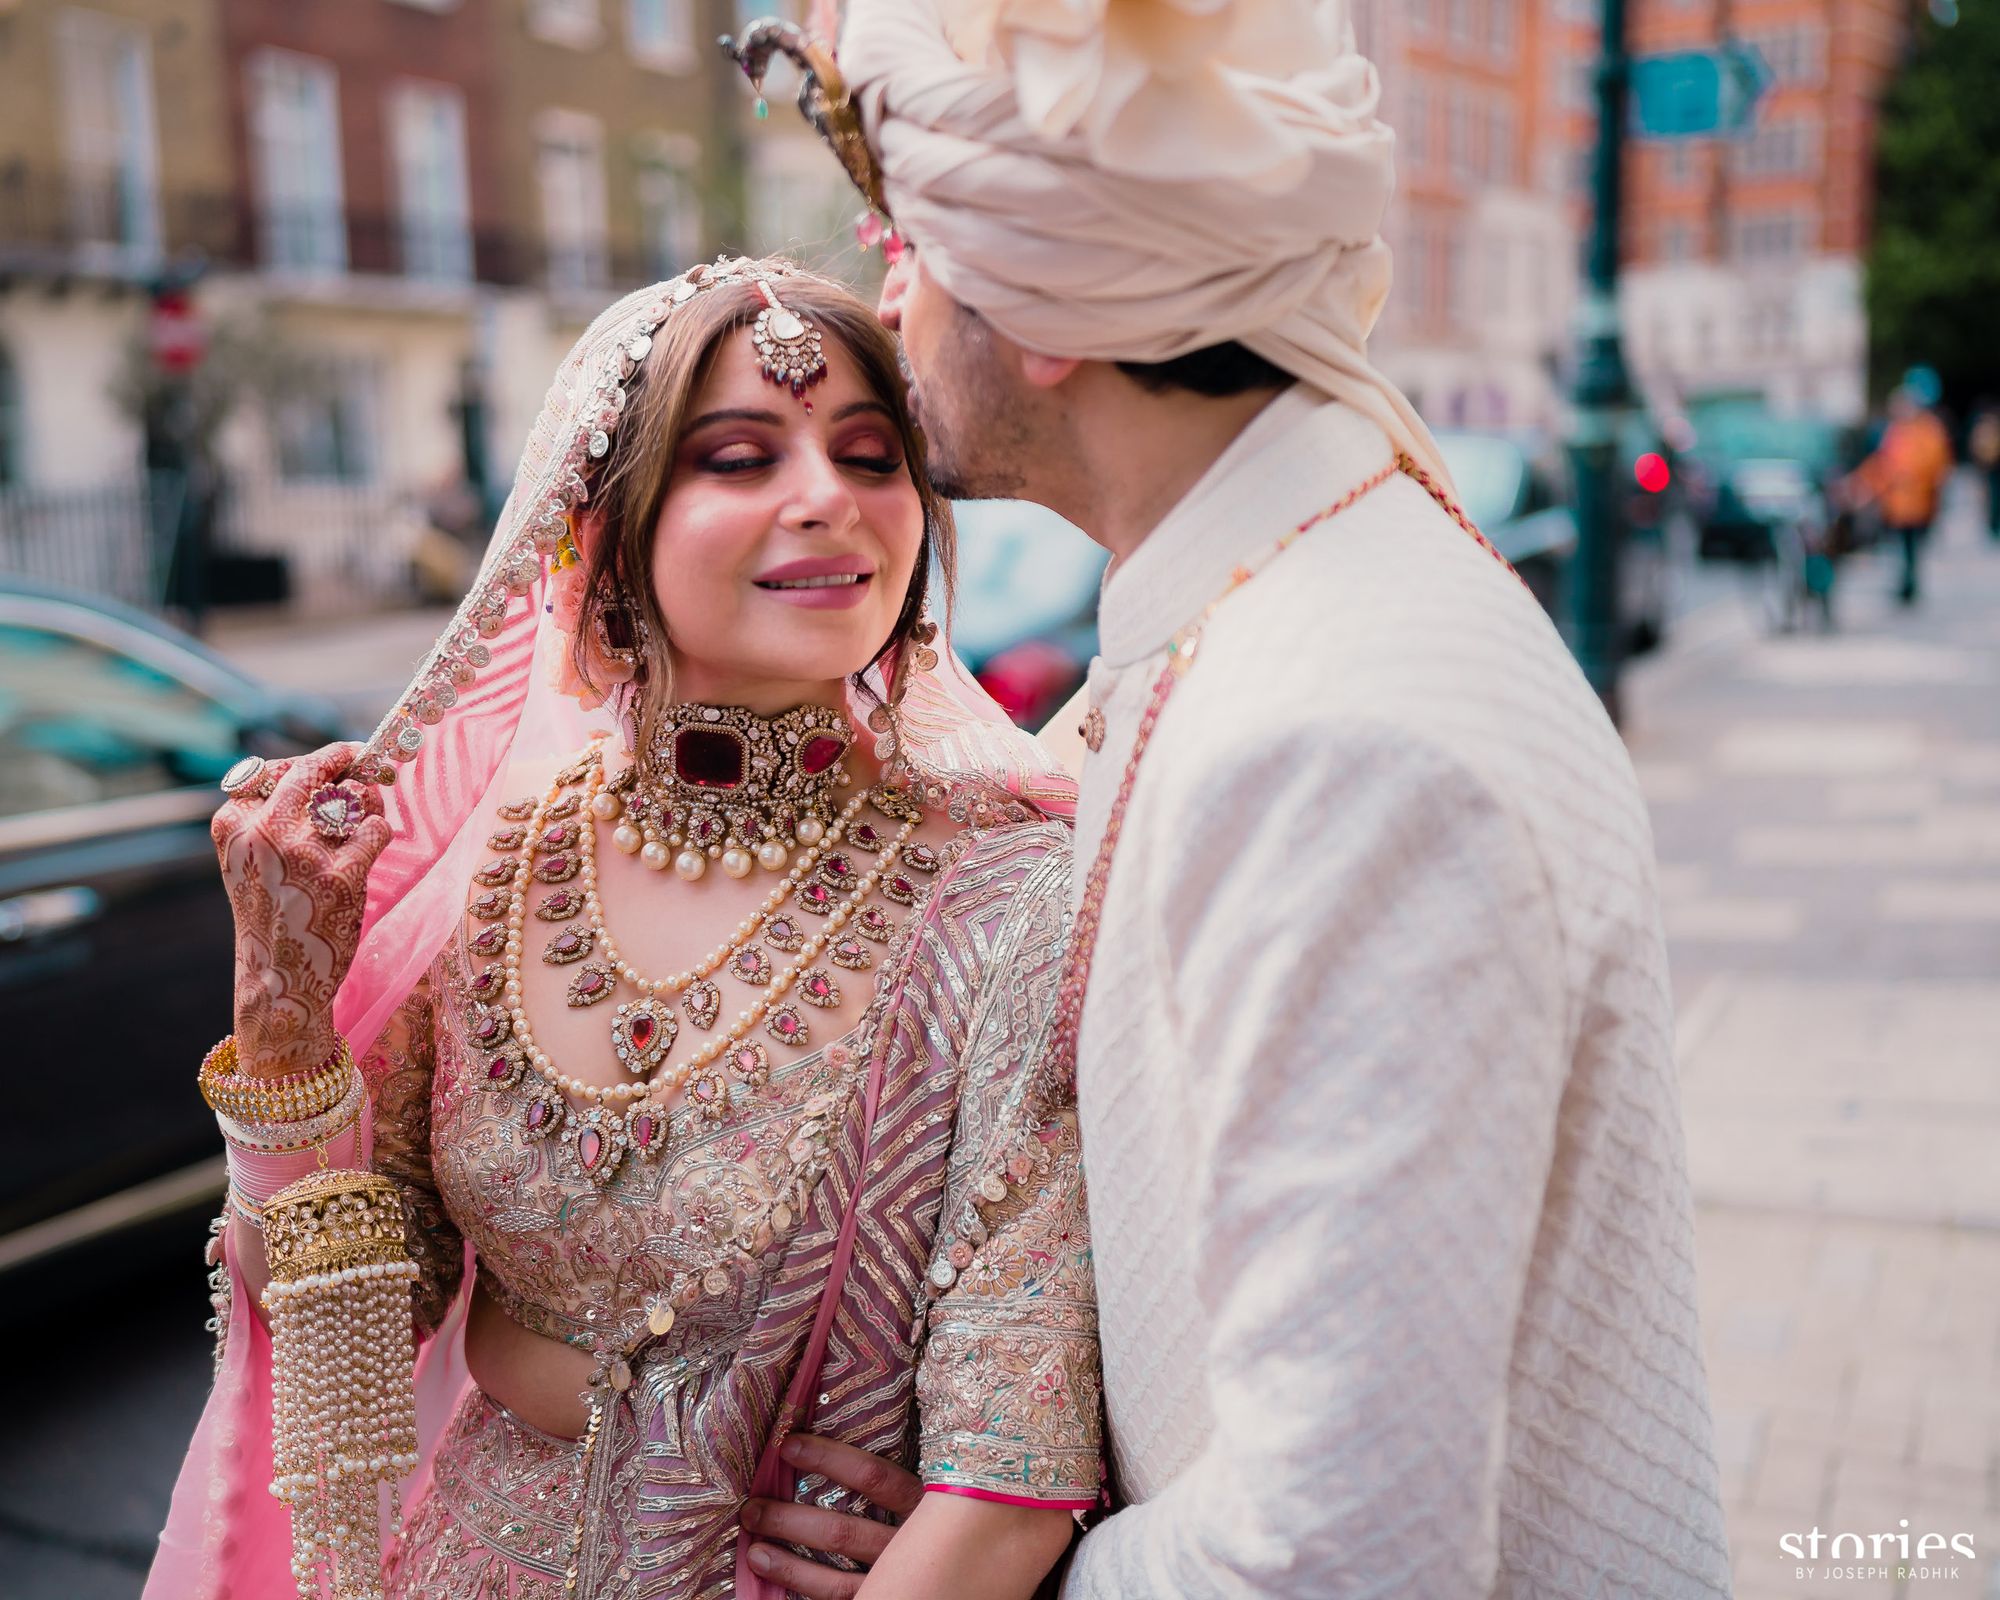 Photos: Kanika Kapoor Marries Beau Gautam Hathiramani In A Dreamy Ceremony In London